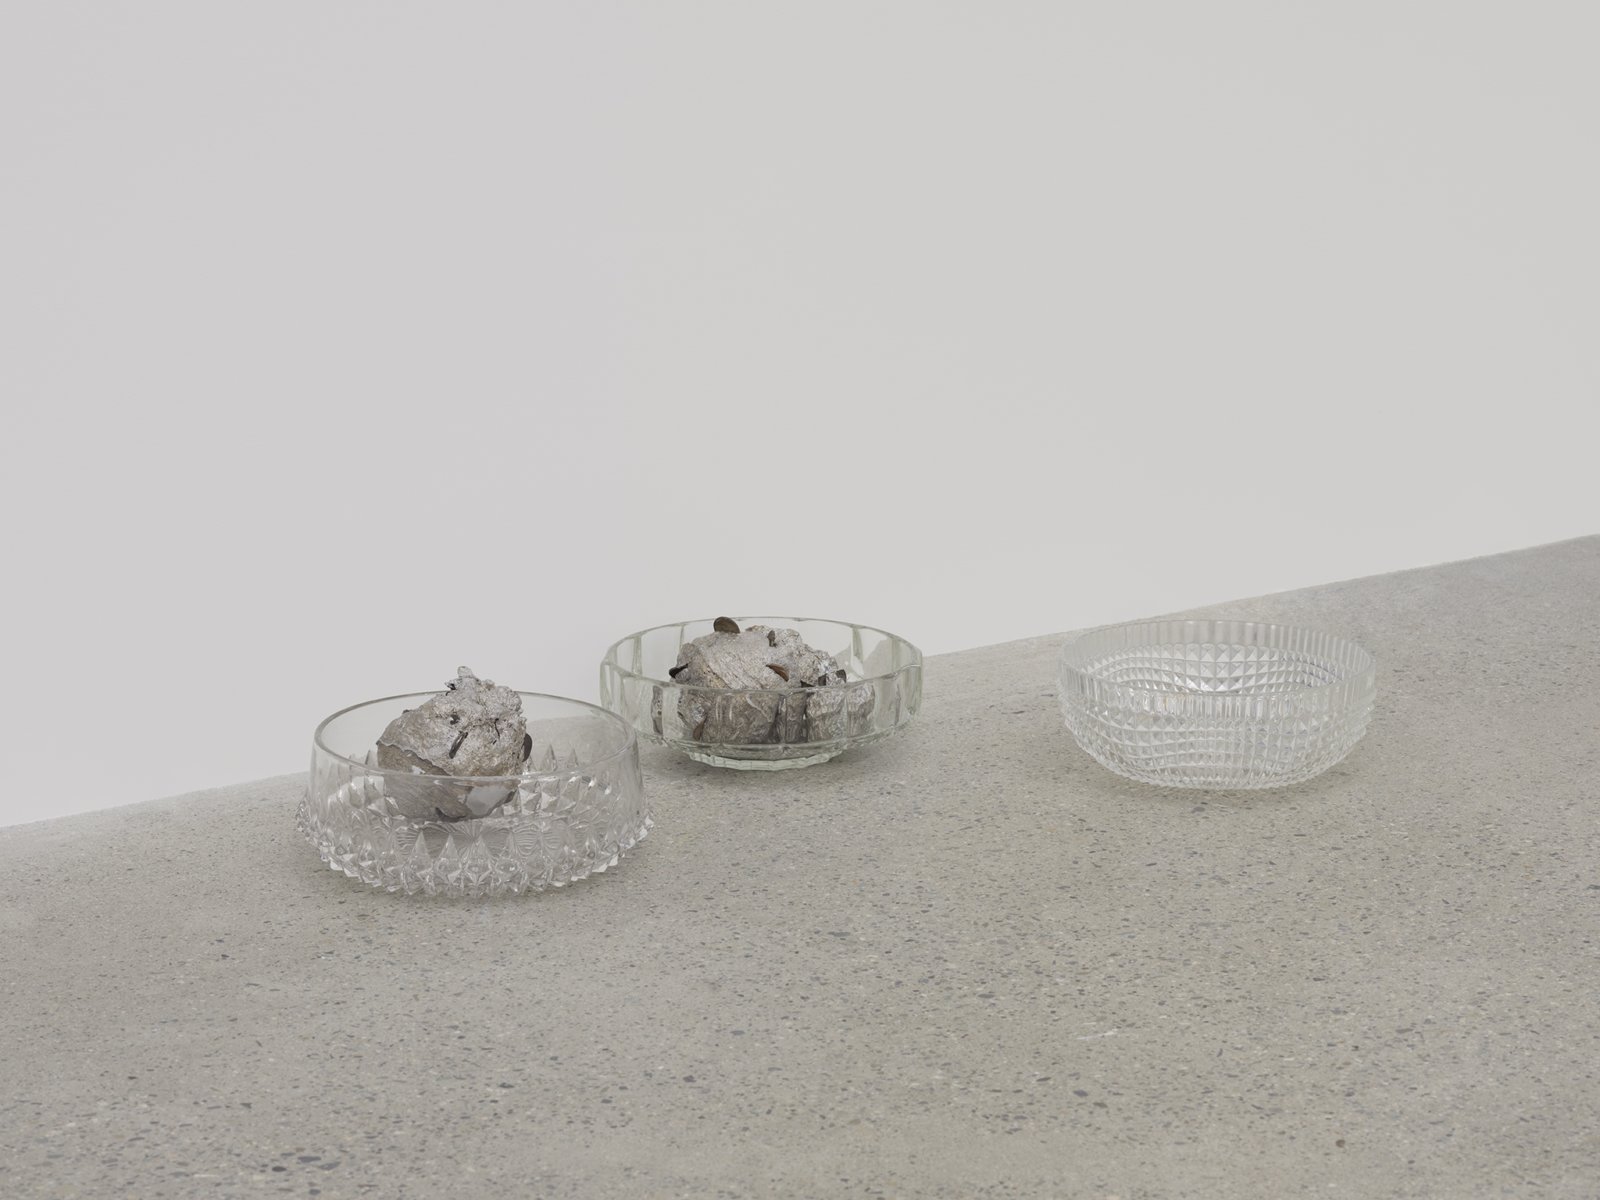 Rochelle Goldberg, Equal Parts I, 2019, aluminum, copper pennies, glass bowls, 4 x 17 x 26 in. (9 x 43 x 66 cm) by Rochelle Goldberg